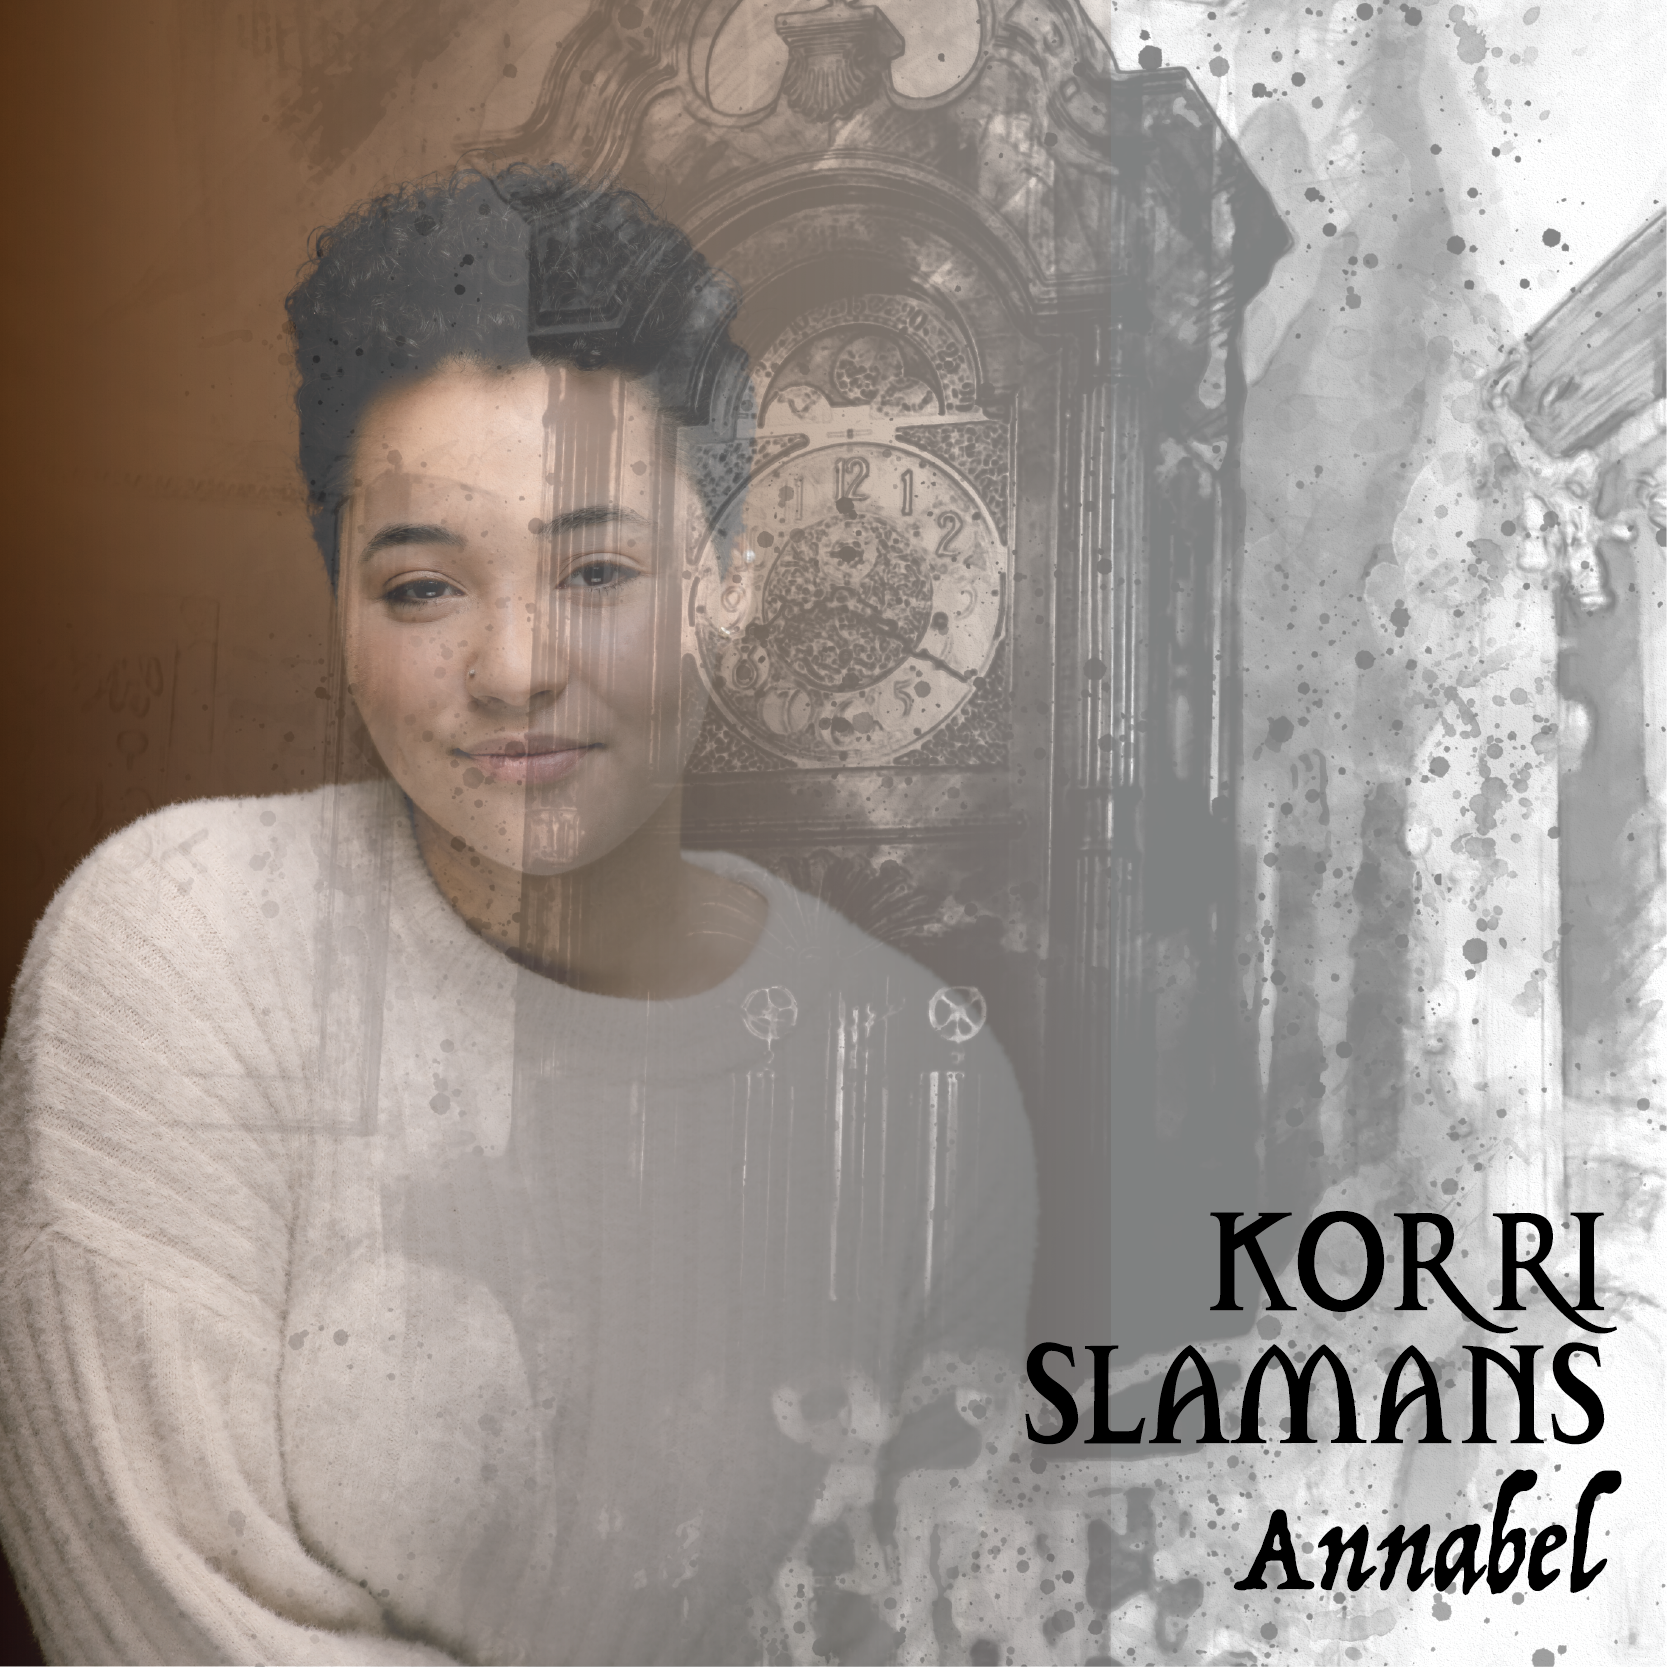 Korri Slamans is Annabel